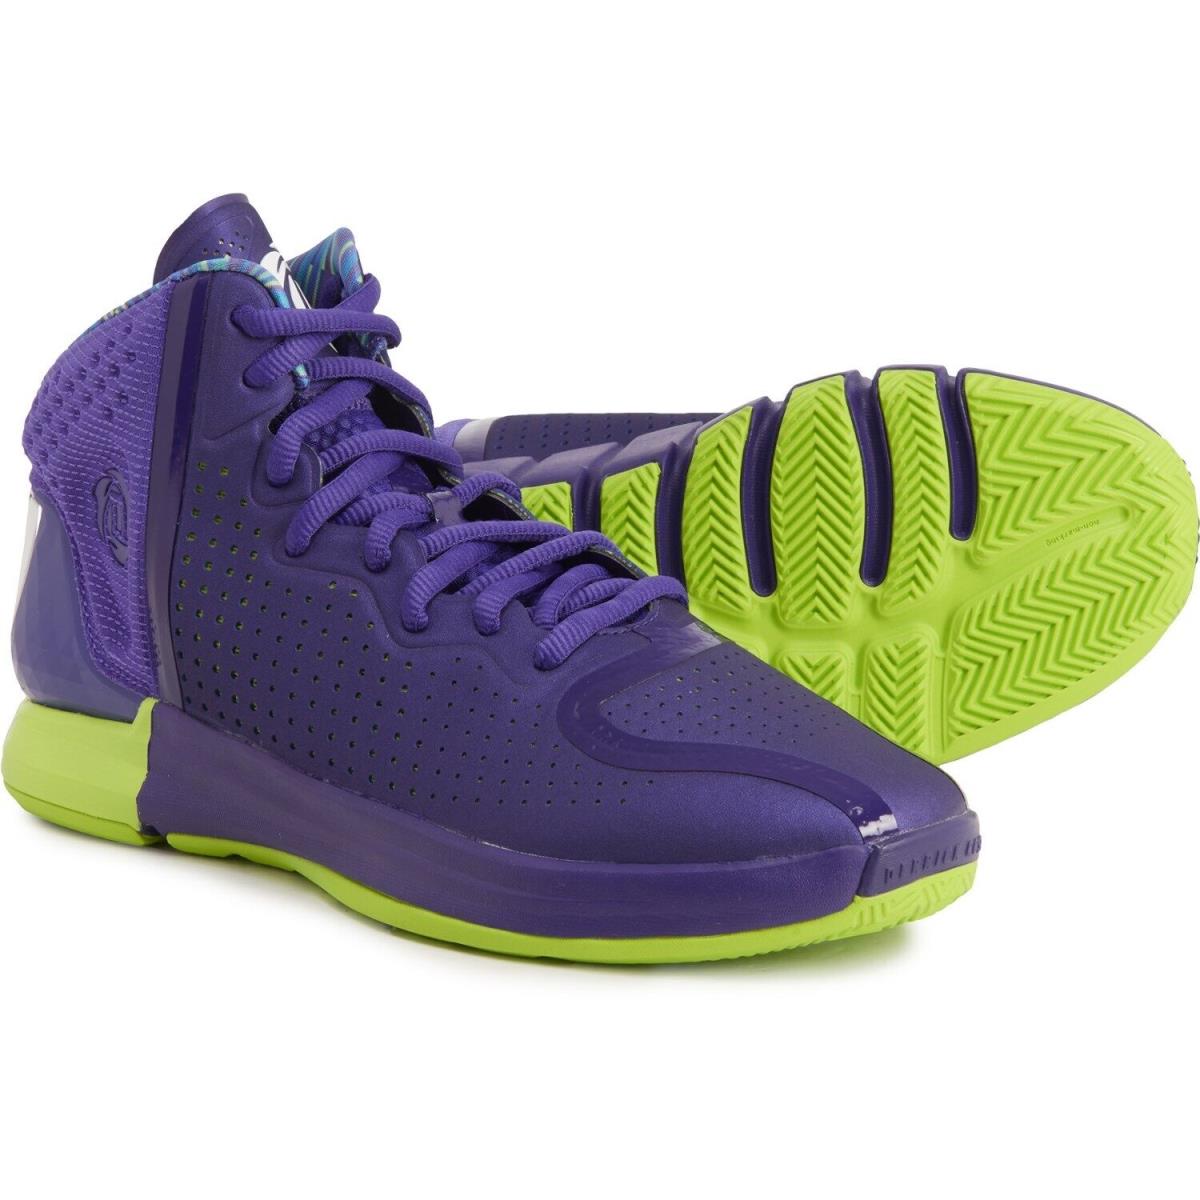 Adidas D Rose 4 Restomod Basketball Shoes For Men Size 13